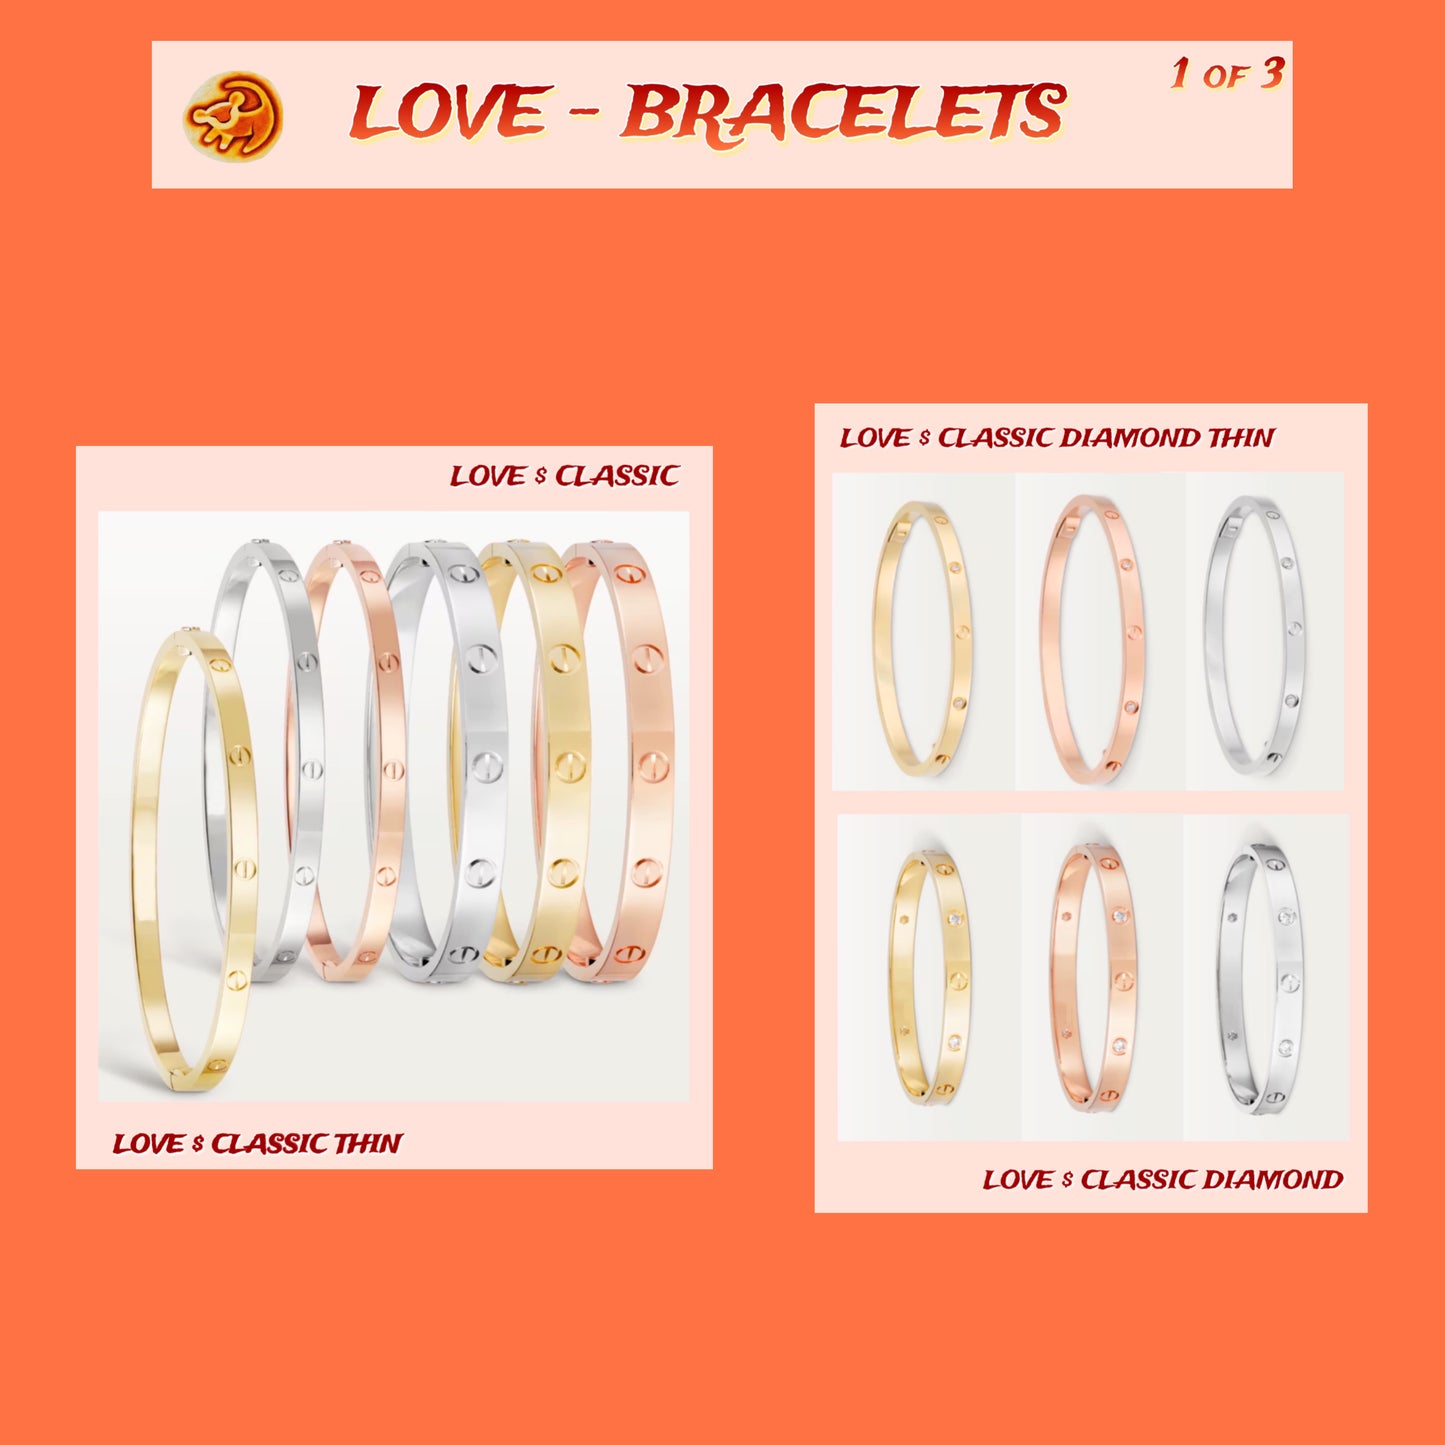 Stock - Love Bracelets 1 of 3